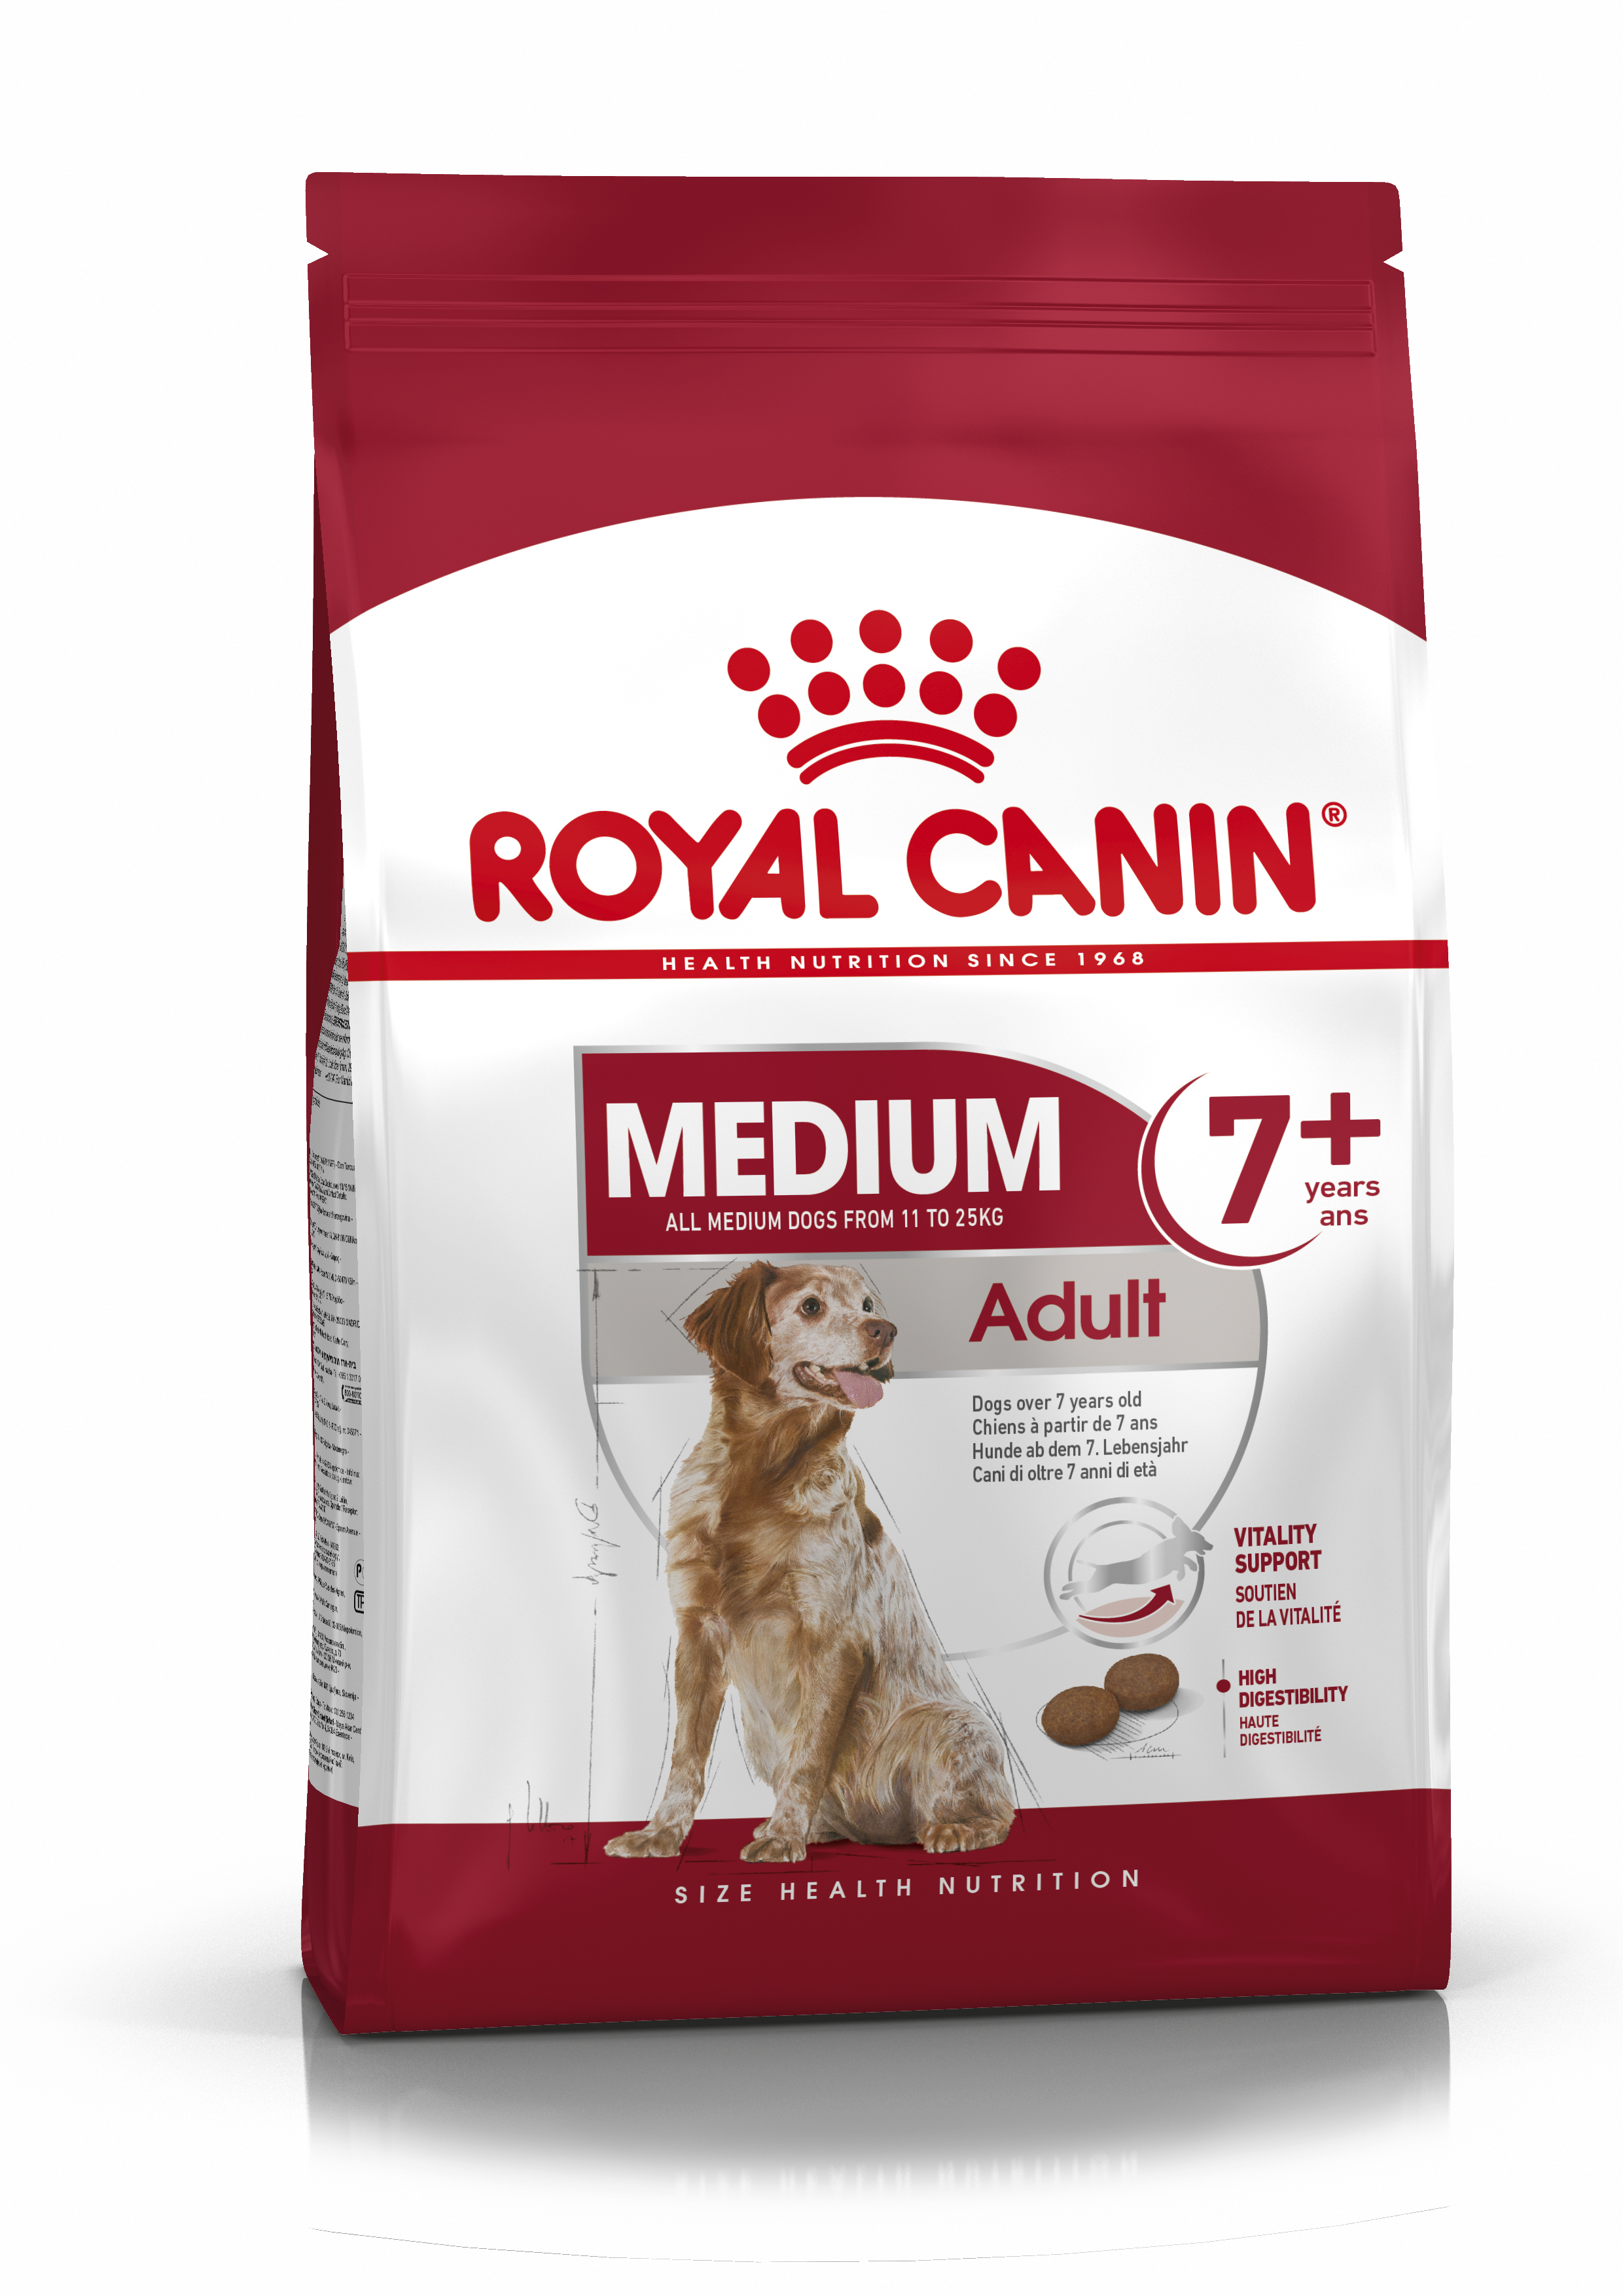 Afbeelding Royal Canin Medium Adult 7+ hondenvoer 15 + 3 kg gratis door Brekz.nl